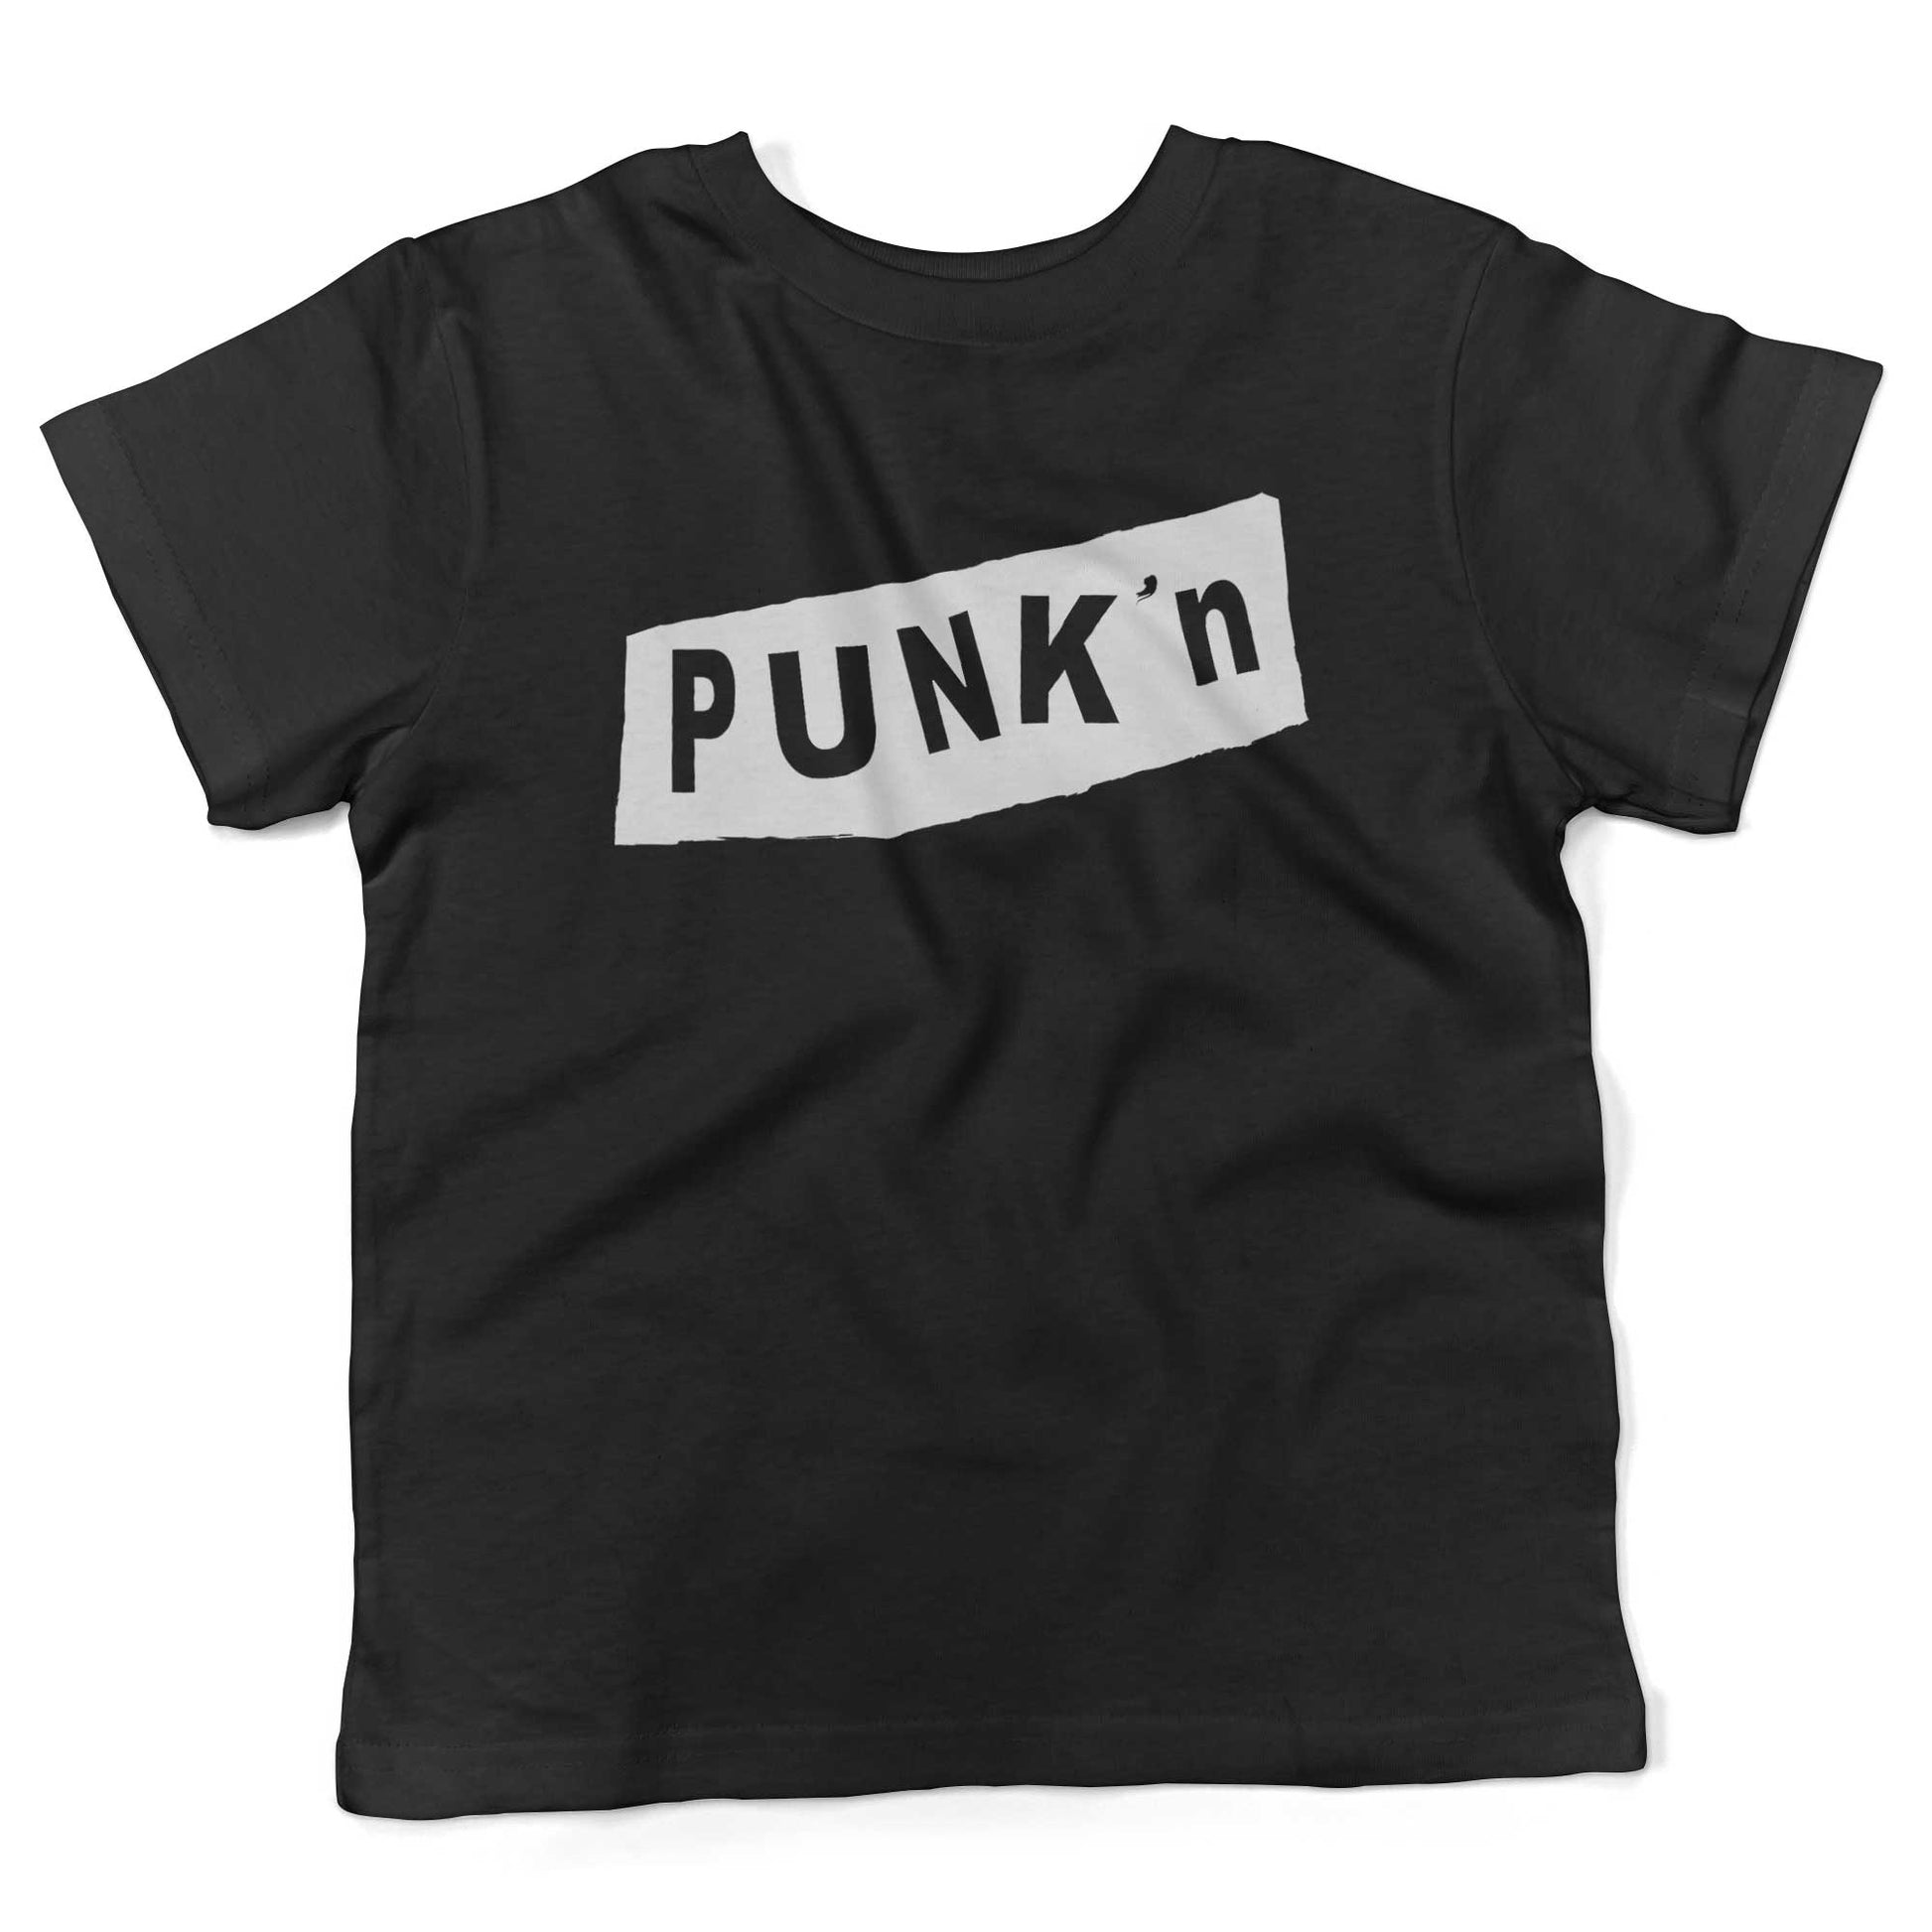 Pumpkin Punk'n Toddler Shirt-Organic Black-2T